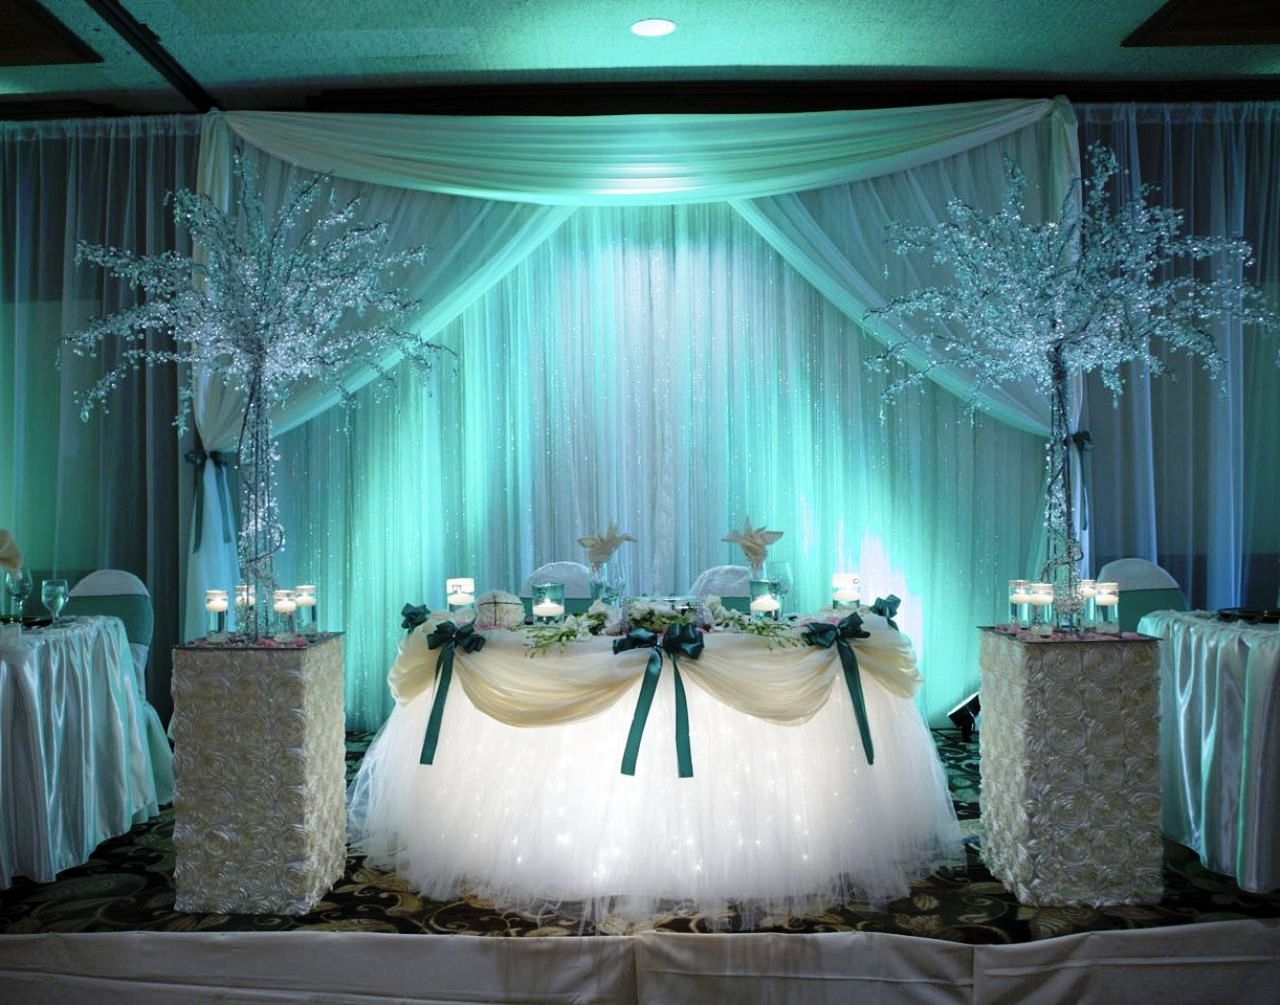 http://wohhwedding.com/wp-content/uploads/2016/05/Best-Teal-Wedding-Table-Decorations.jpg